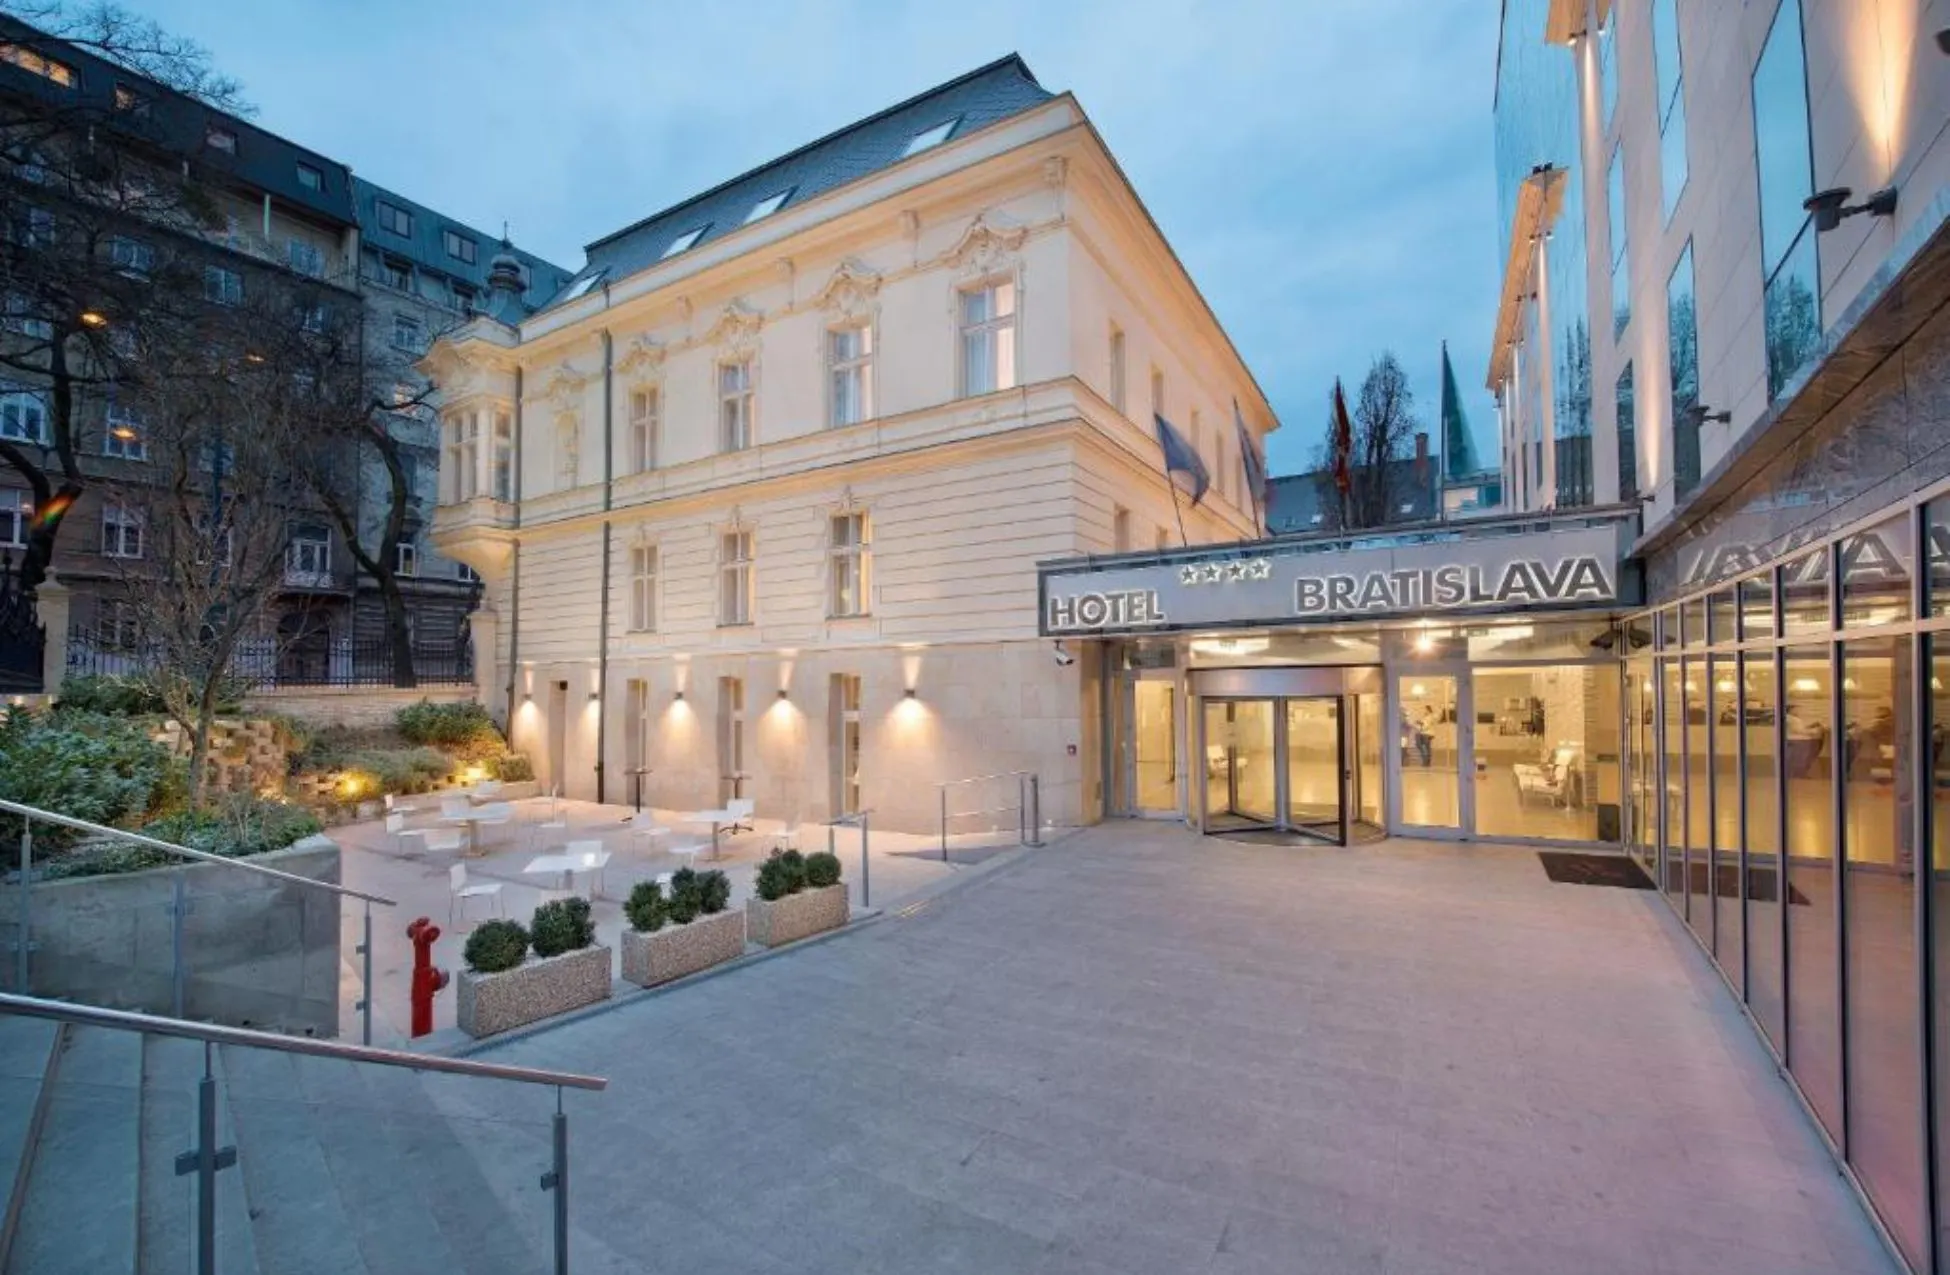 Loft Hotel Bratislava - Best Hotels In Bratislava